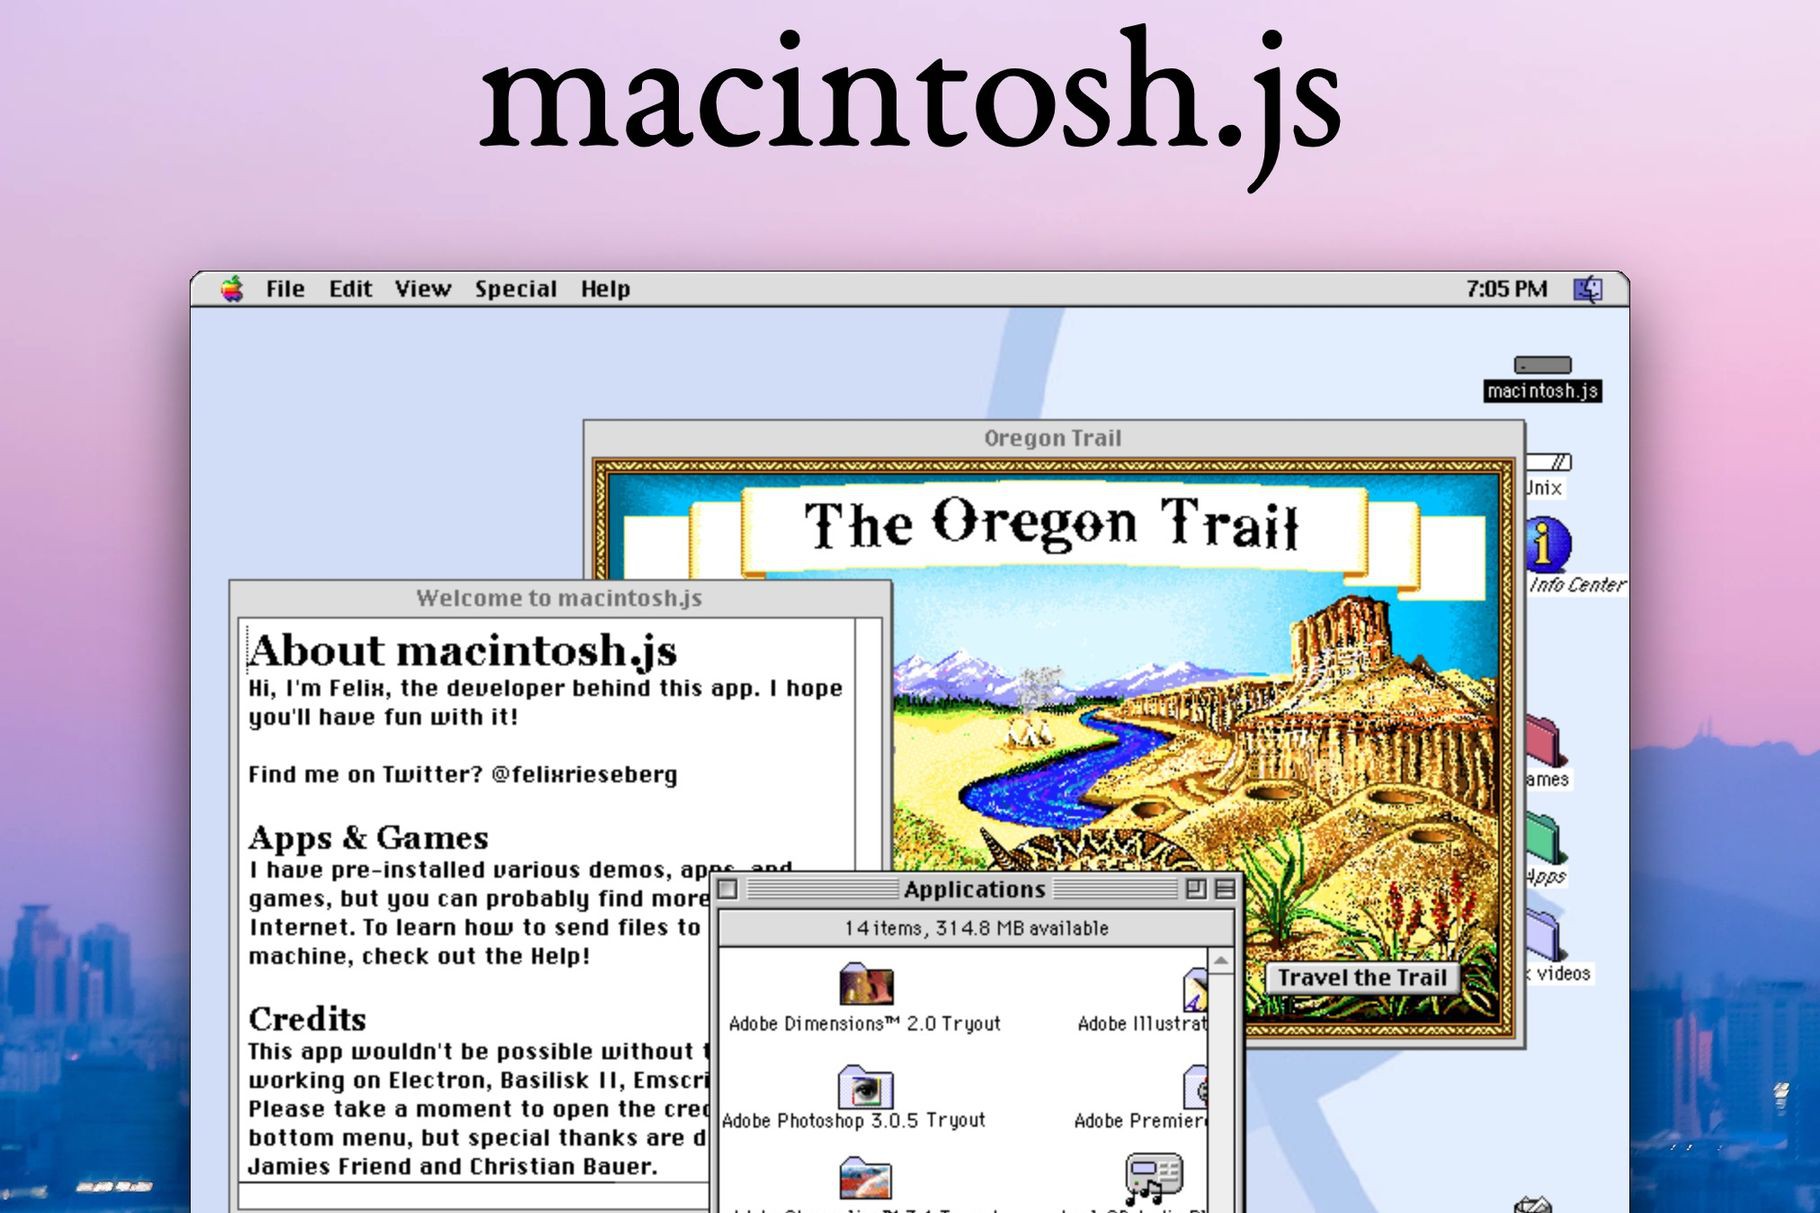 mac os 9 emulator in browser